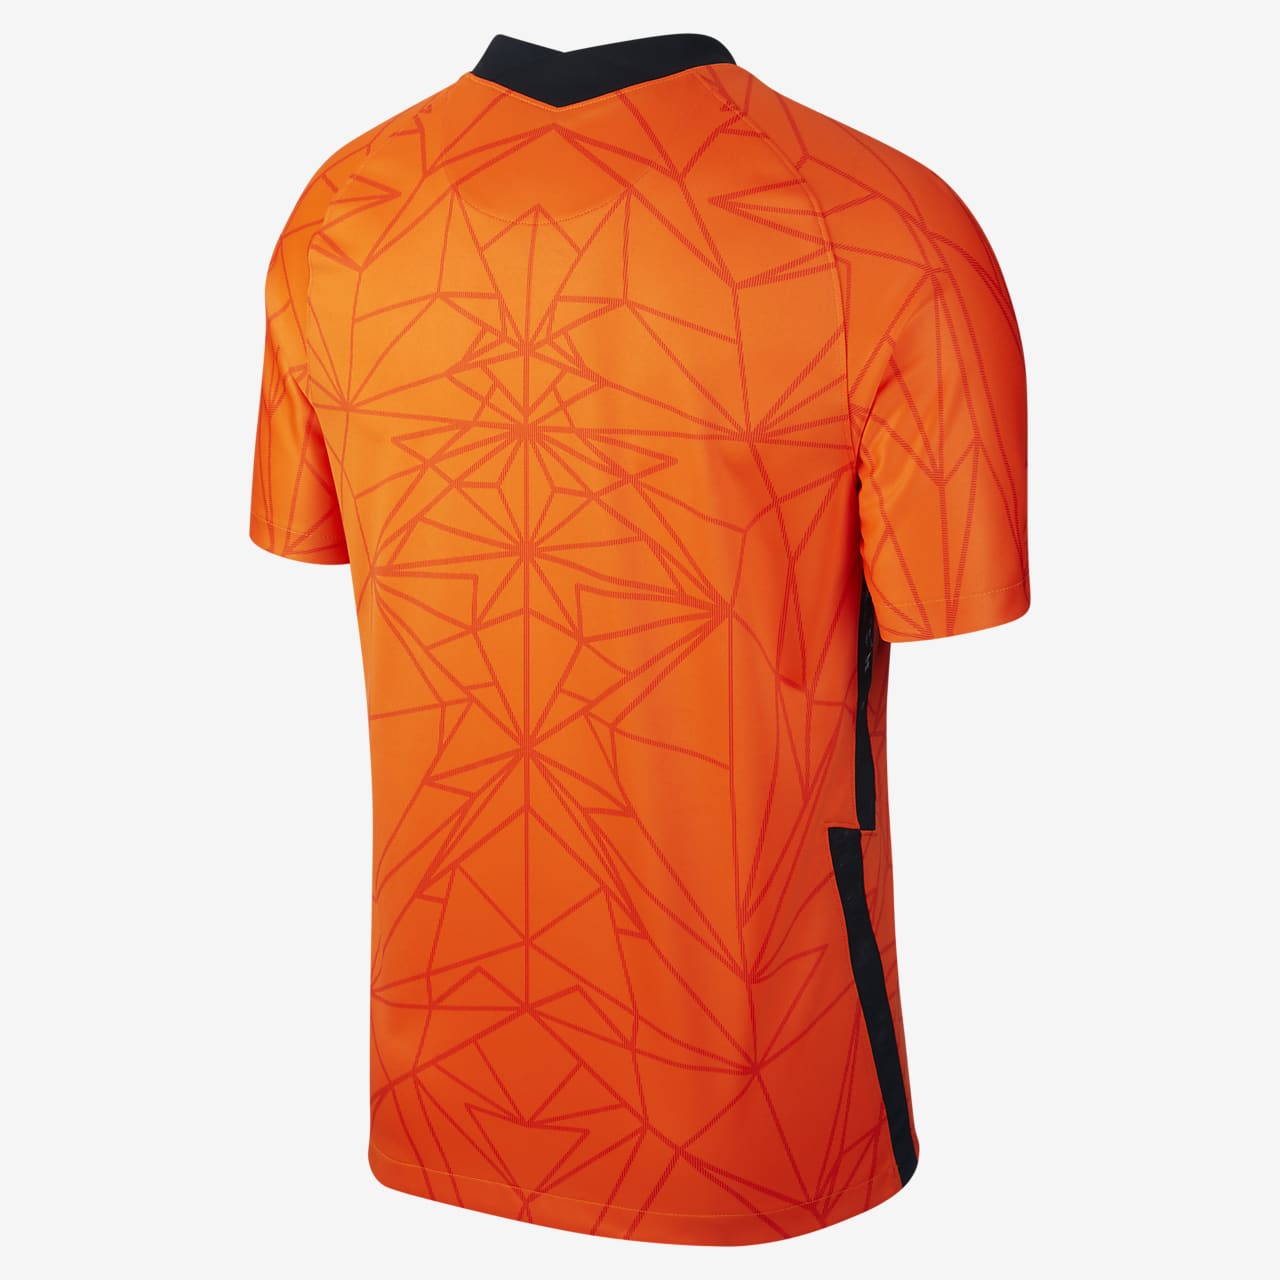 Nike公式 オランダ スタジアム ホーム メンズ サッカーユニフォーム オンラインストア 通販サイト